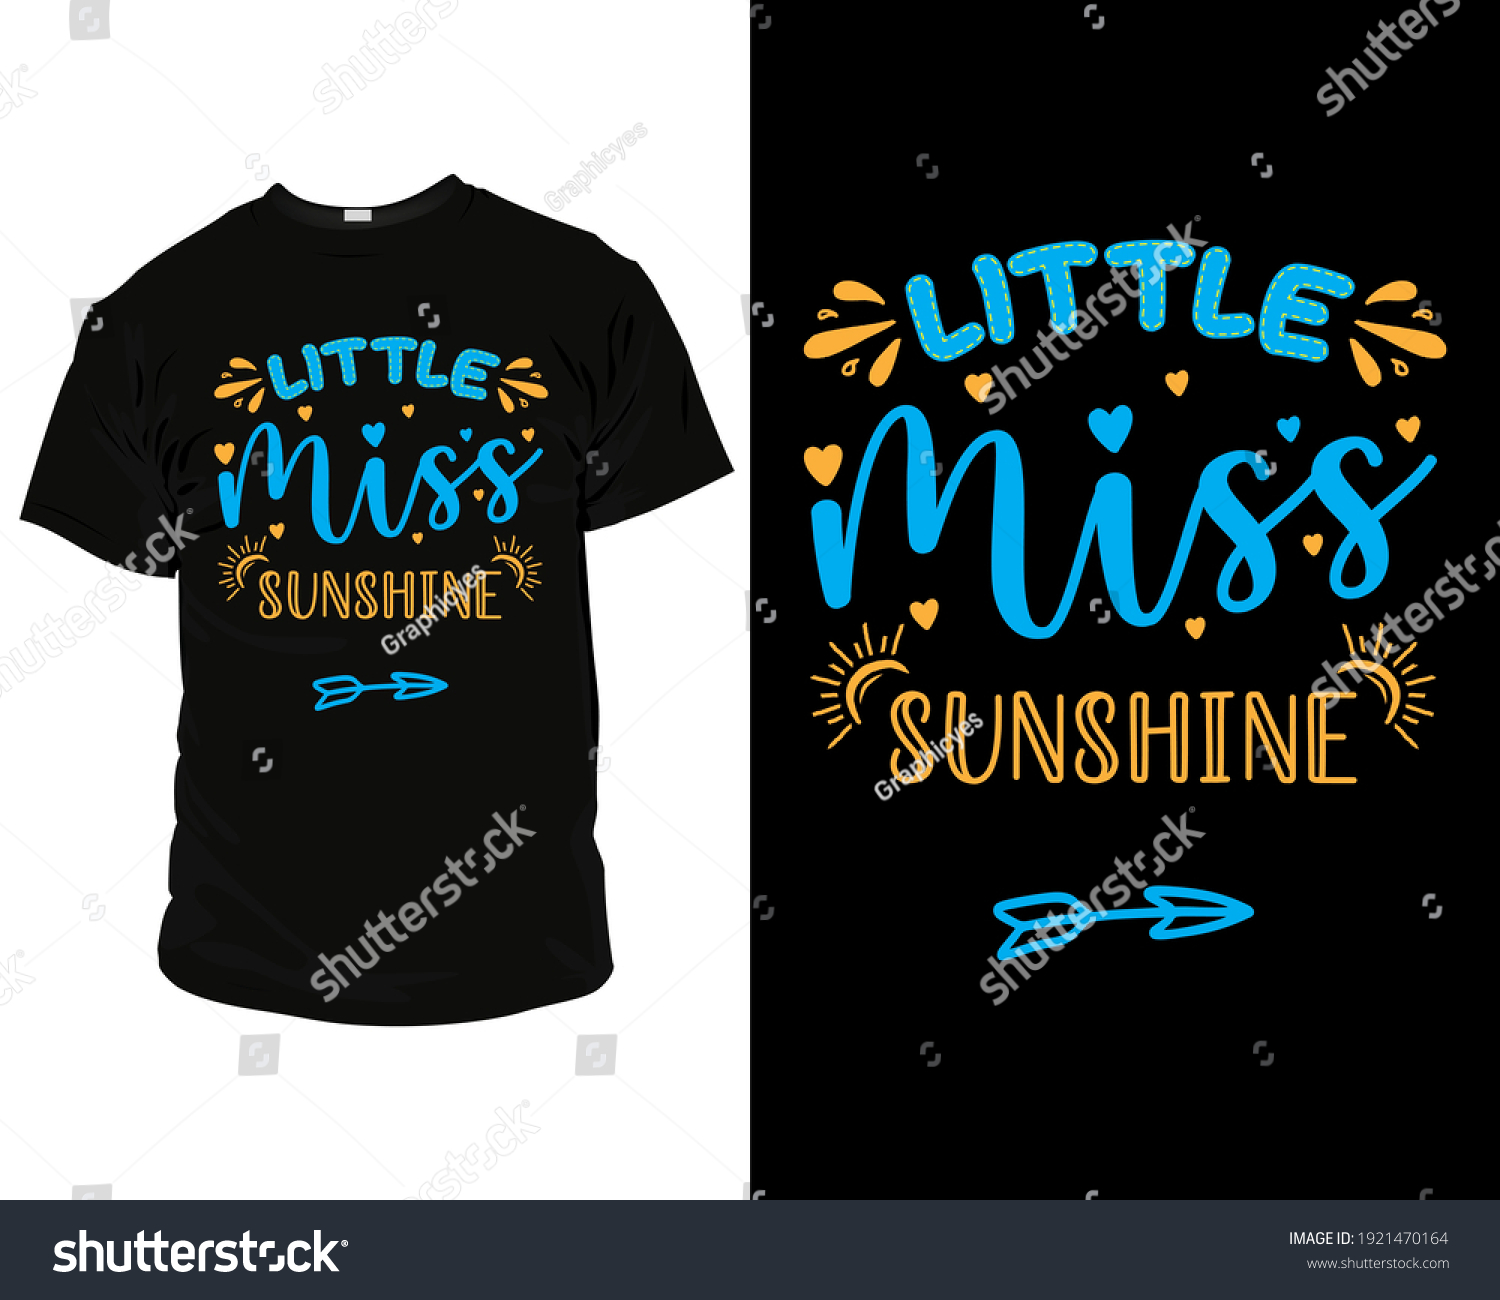 118 Little miss sunshine Images, Stock Photos  Vectors | Shutterstock